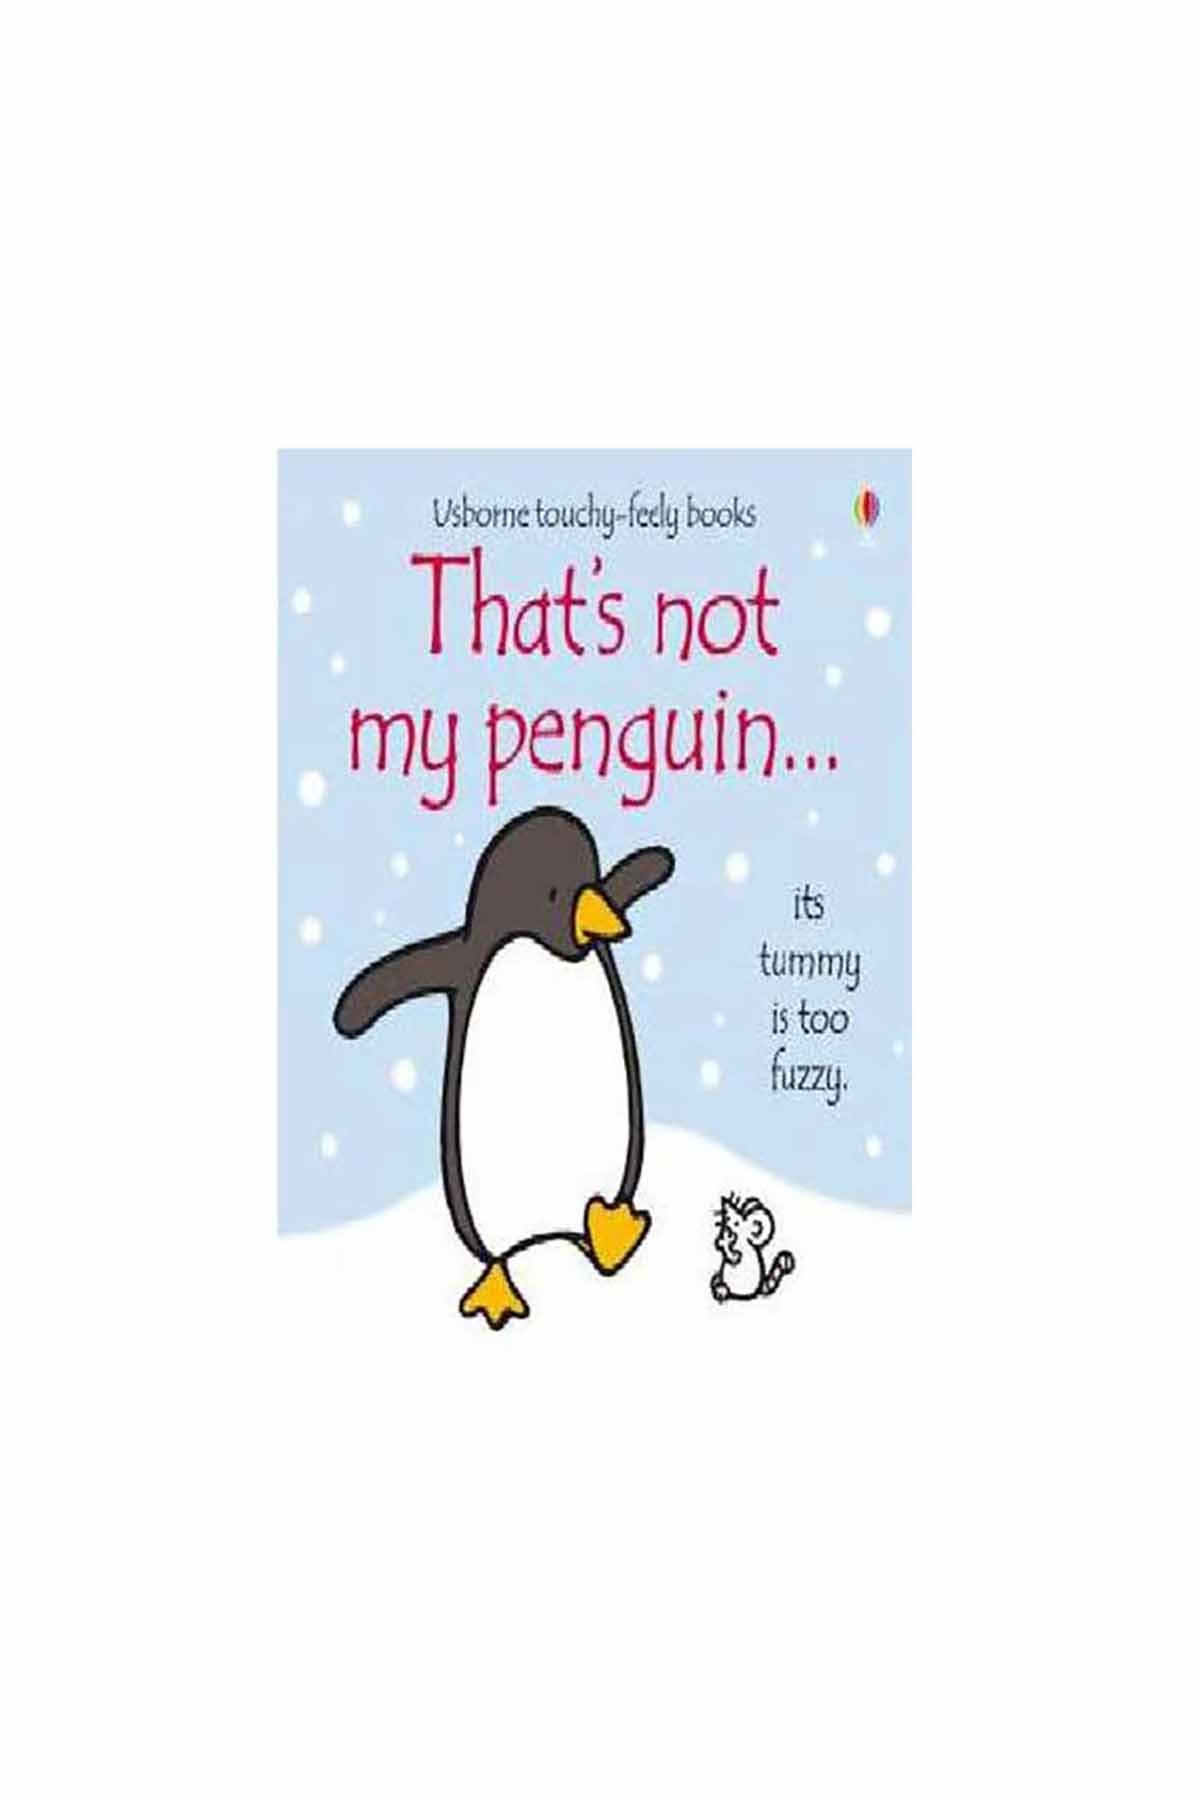 The Usborne That's not My Penguin